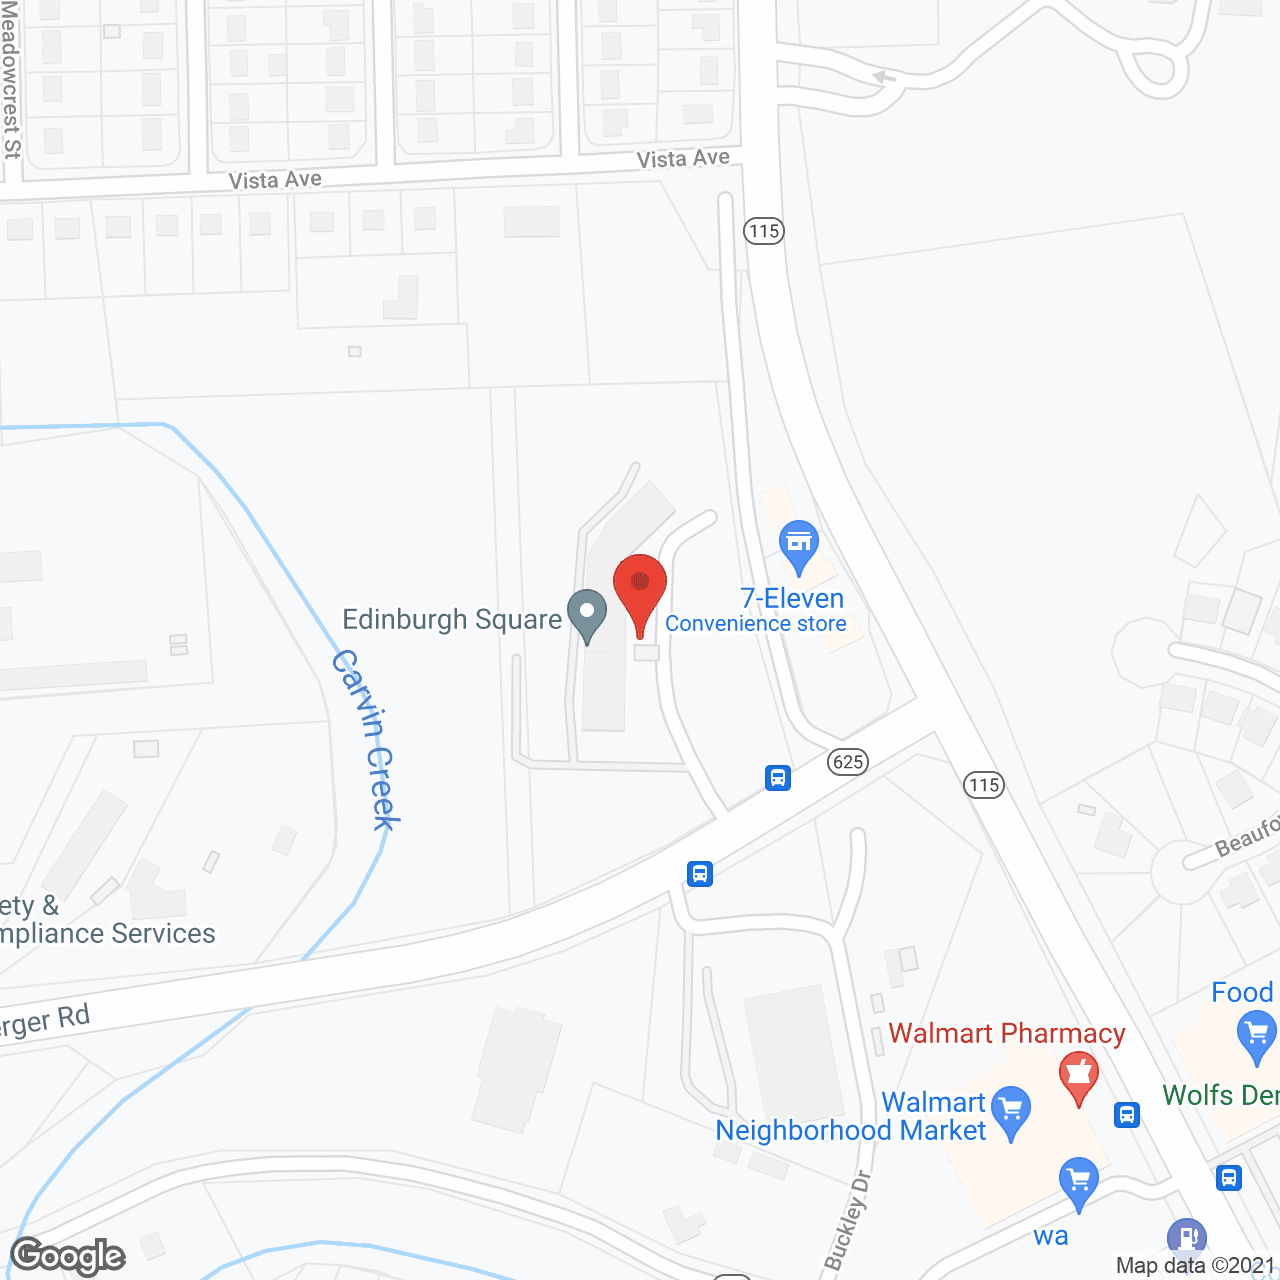 Edinburgh Square in google map